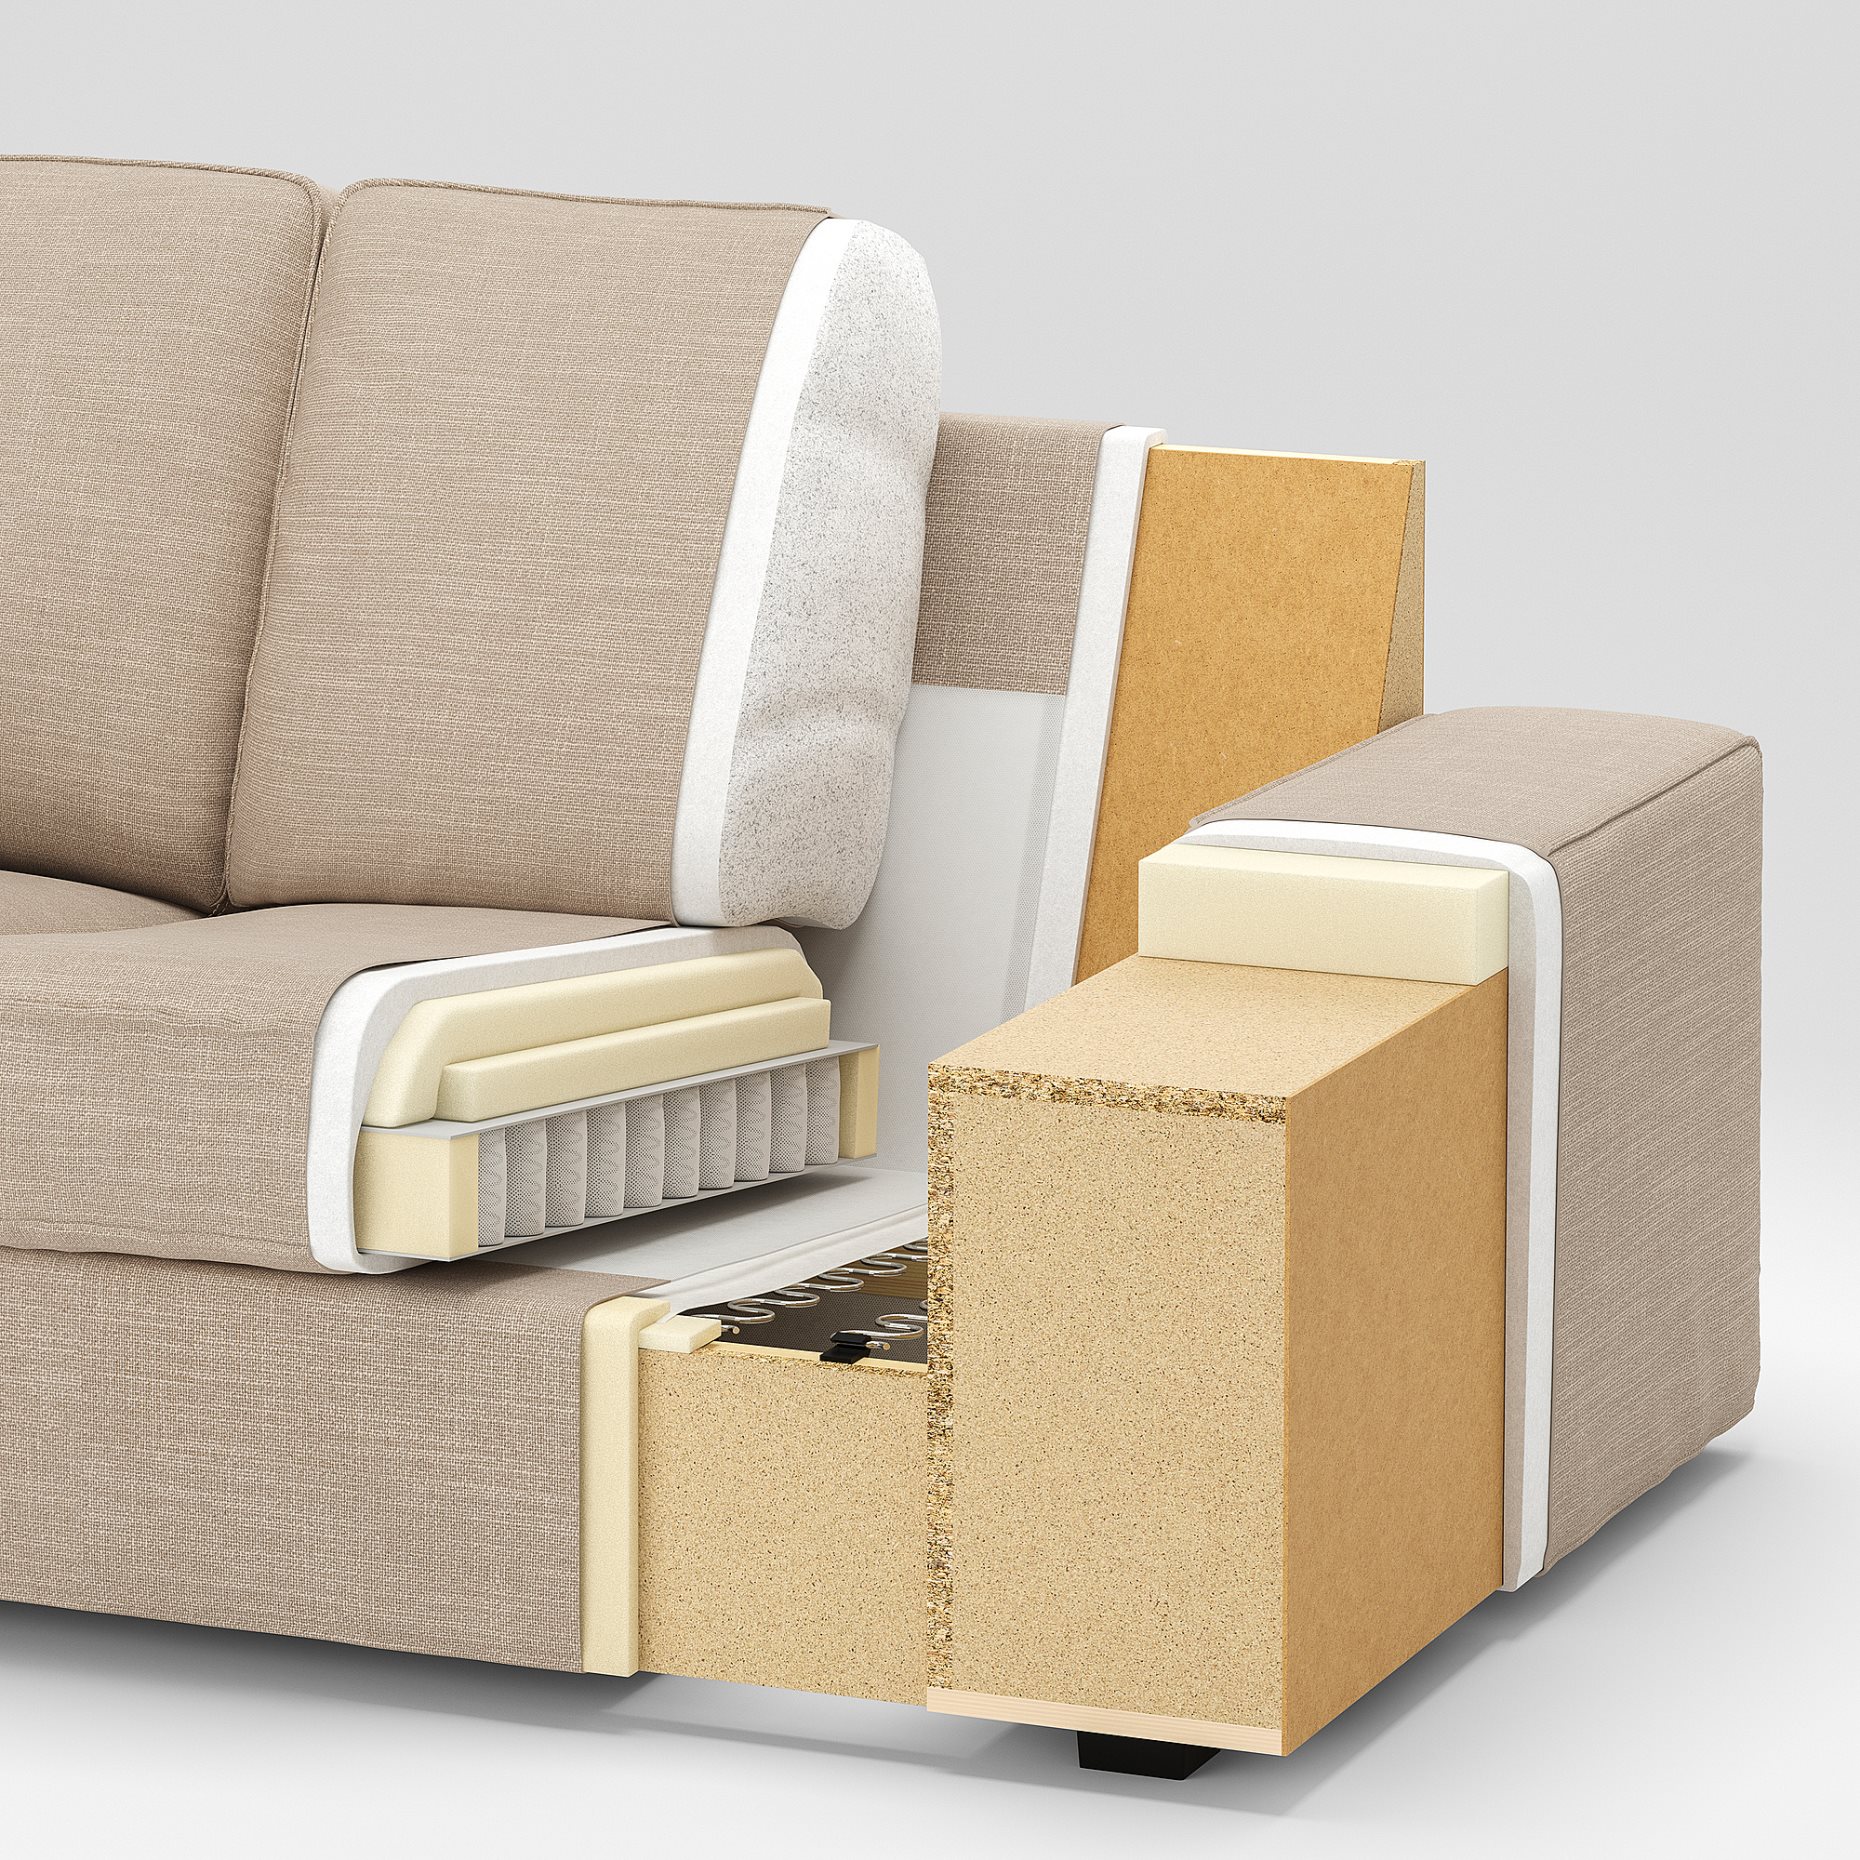 KIVIK, 3-seat sofa with chaise longue, 994.828.39